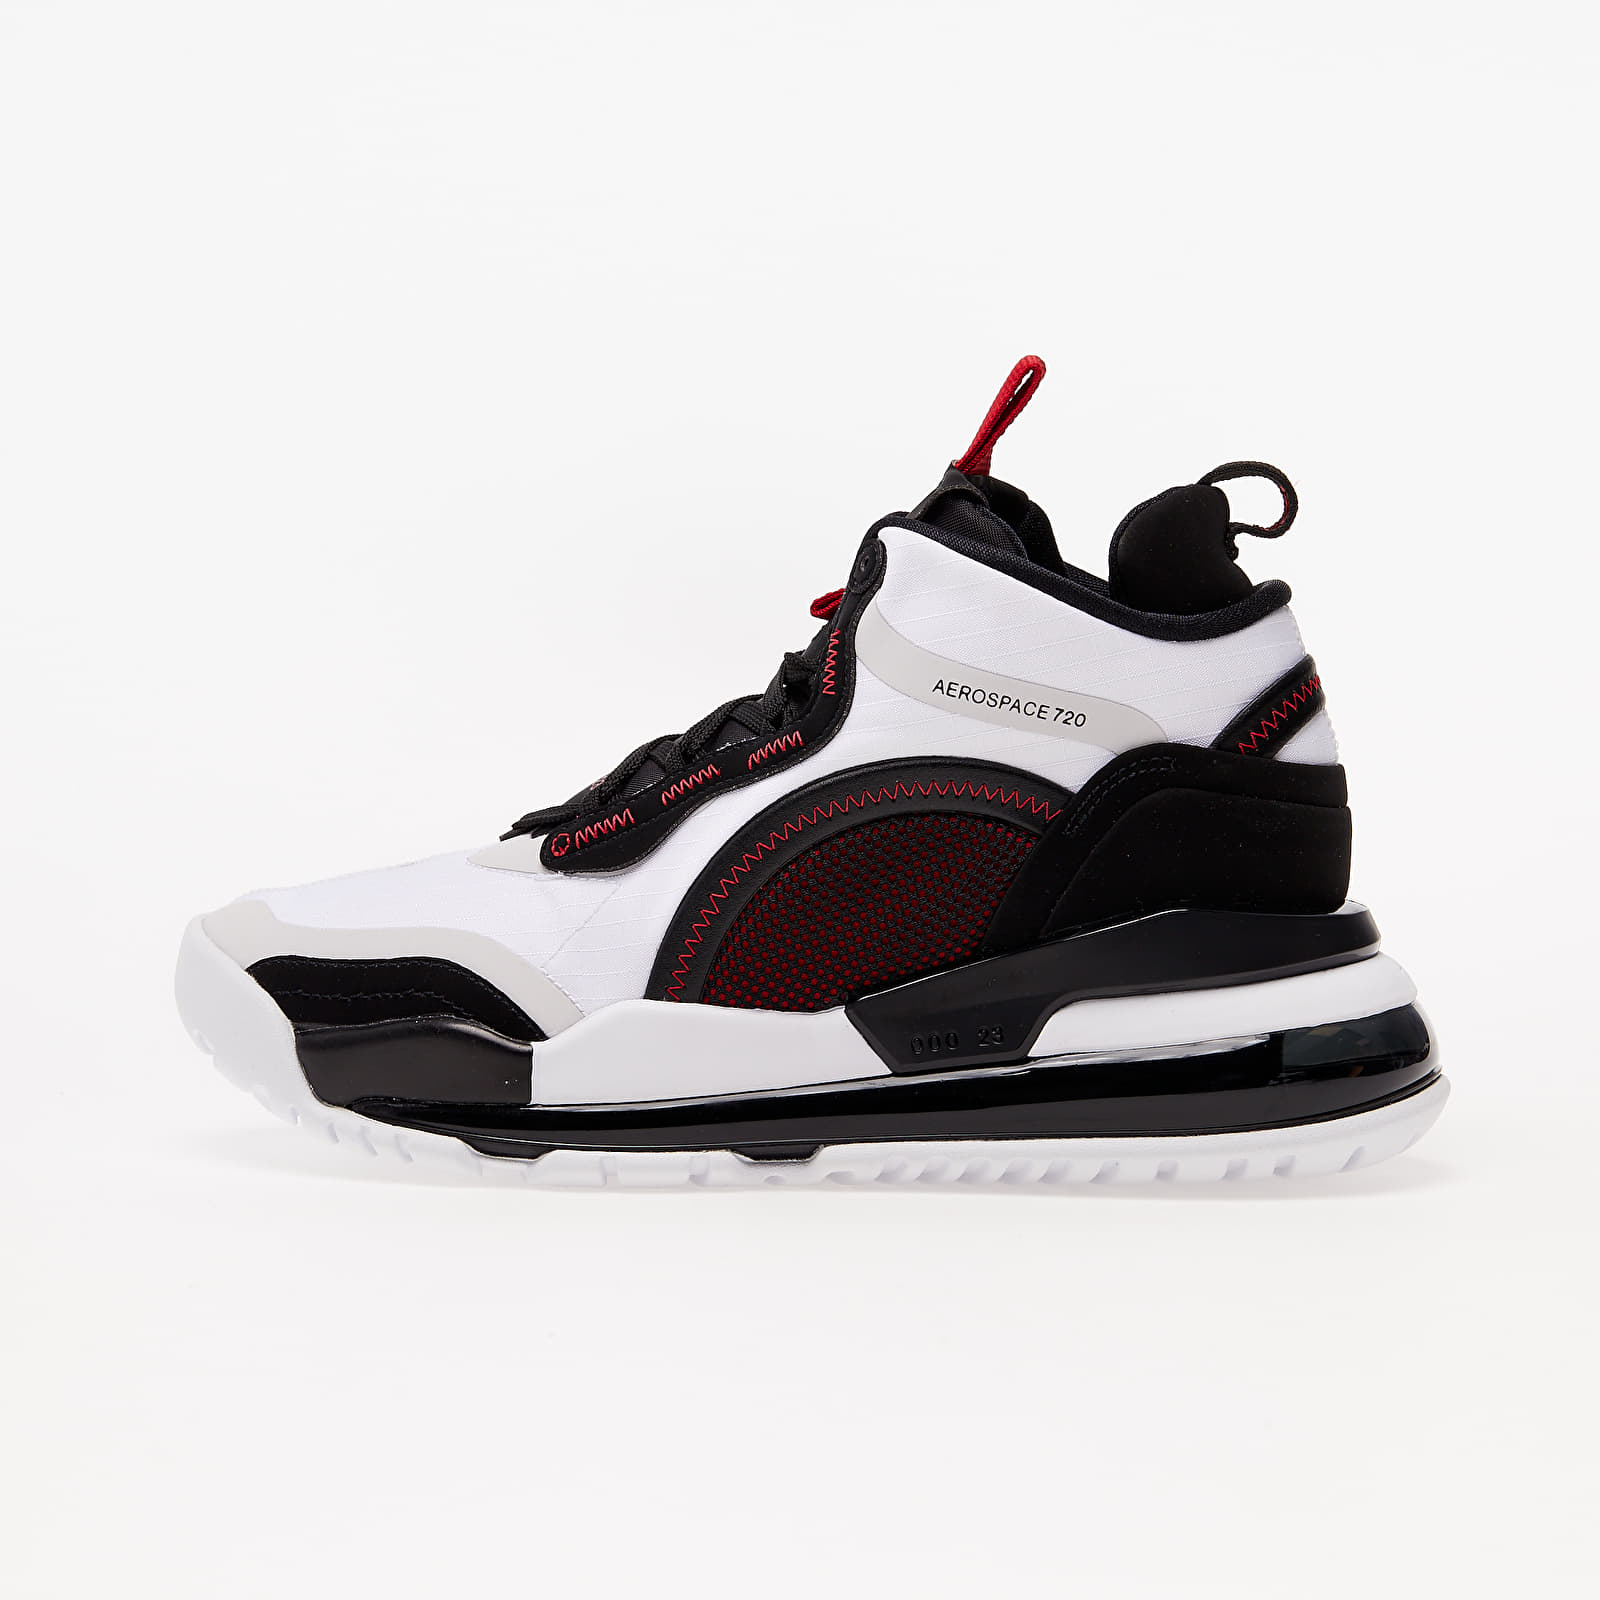 Men's shoes Jordan Aerospace 720 White/ Gym Red-Black-Vast Grey